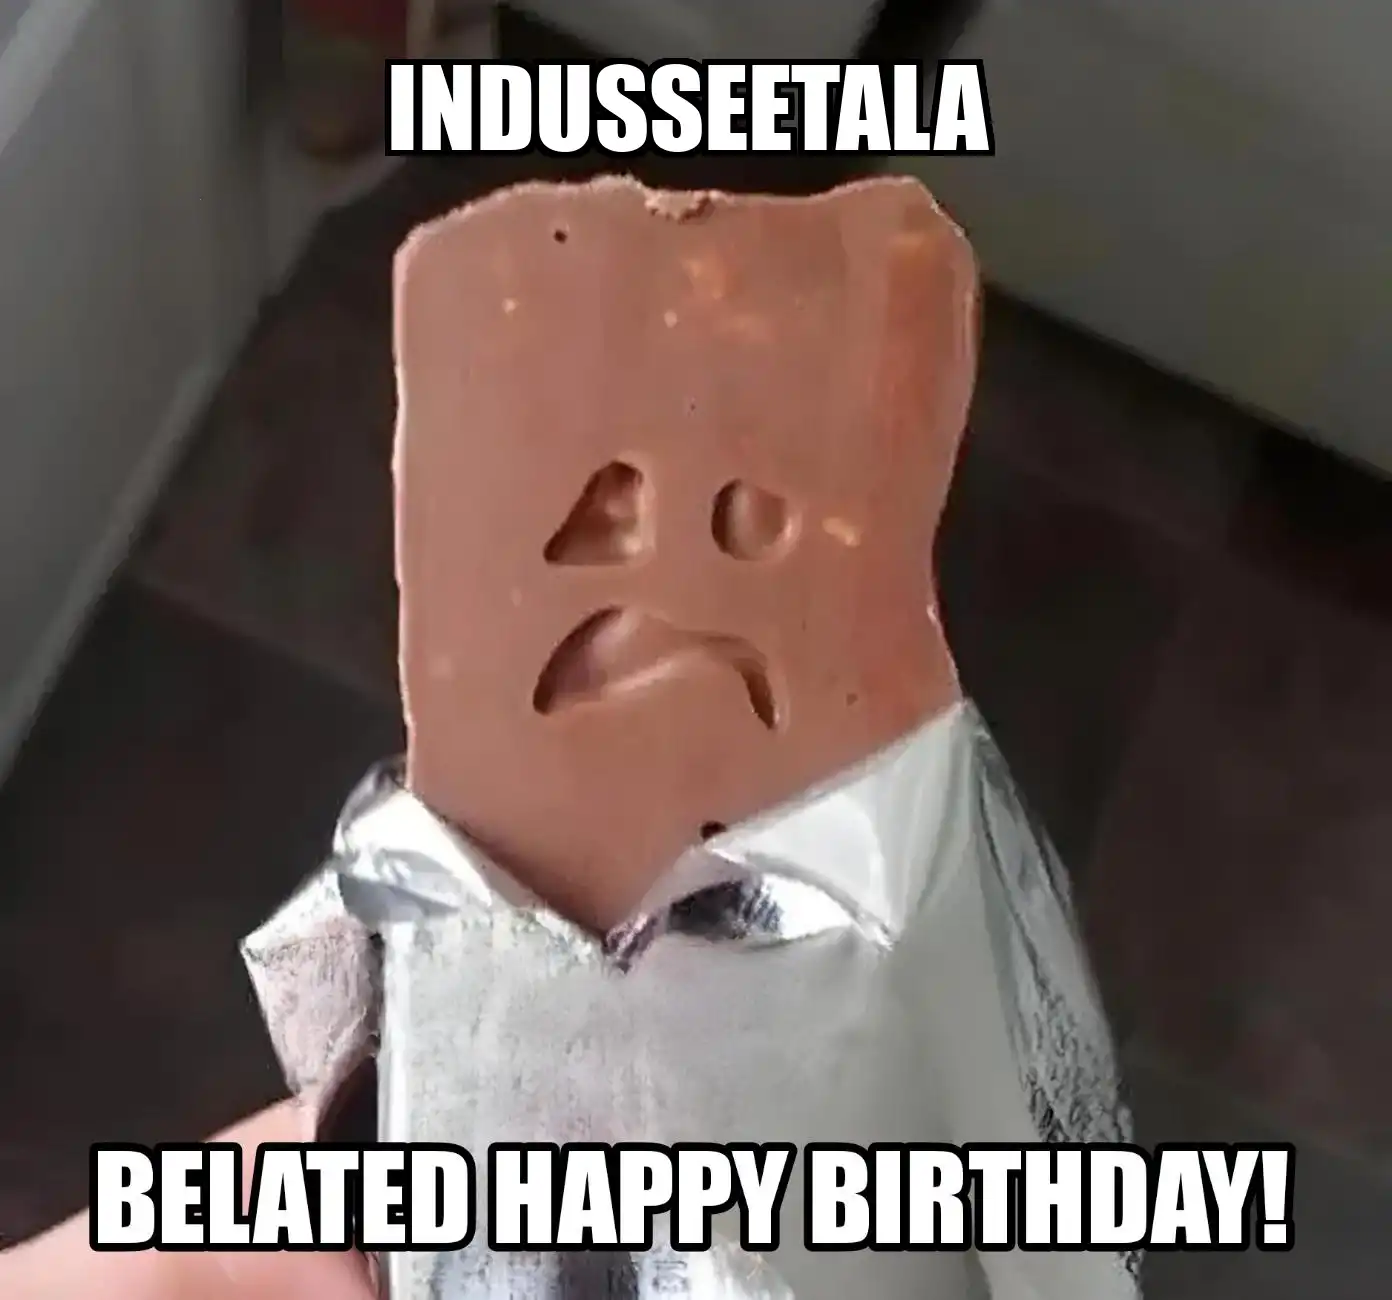 Happy Birthday Indusseetala Belated Happy Birthday Meme